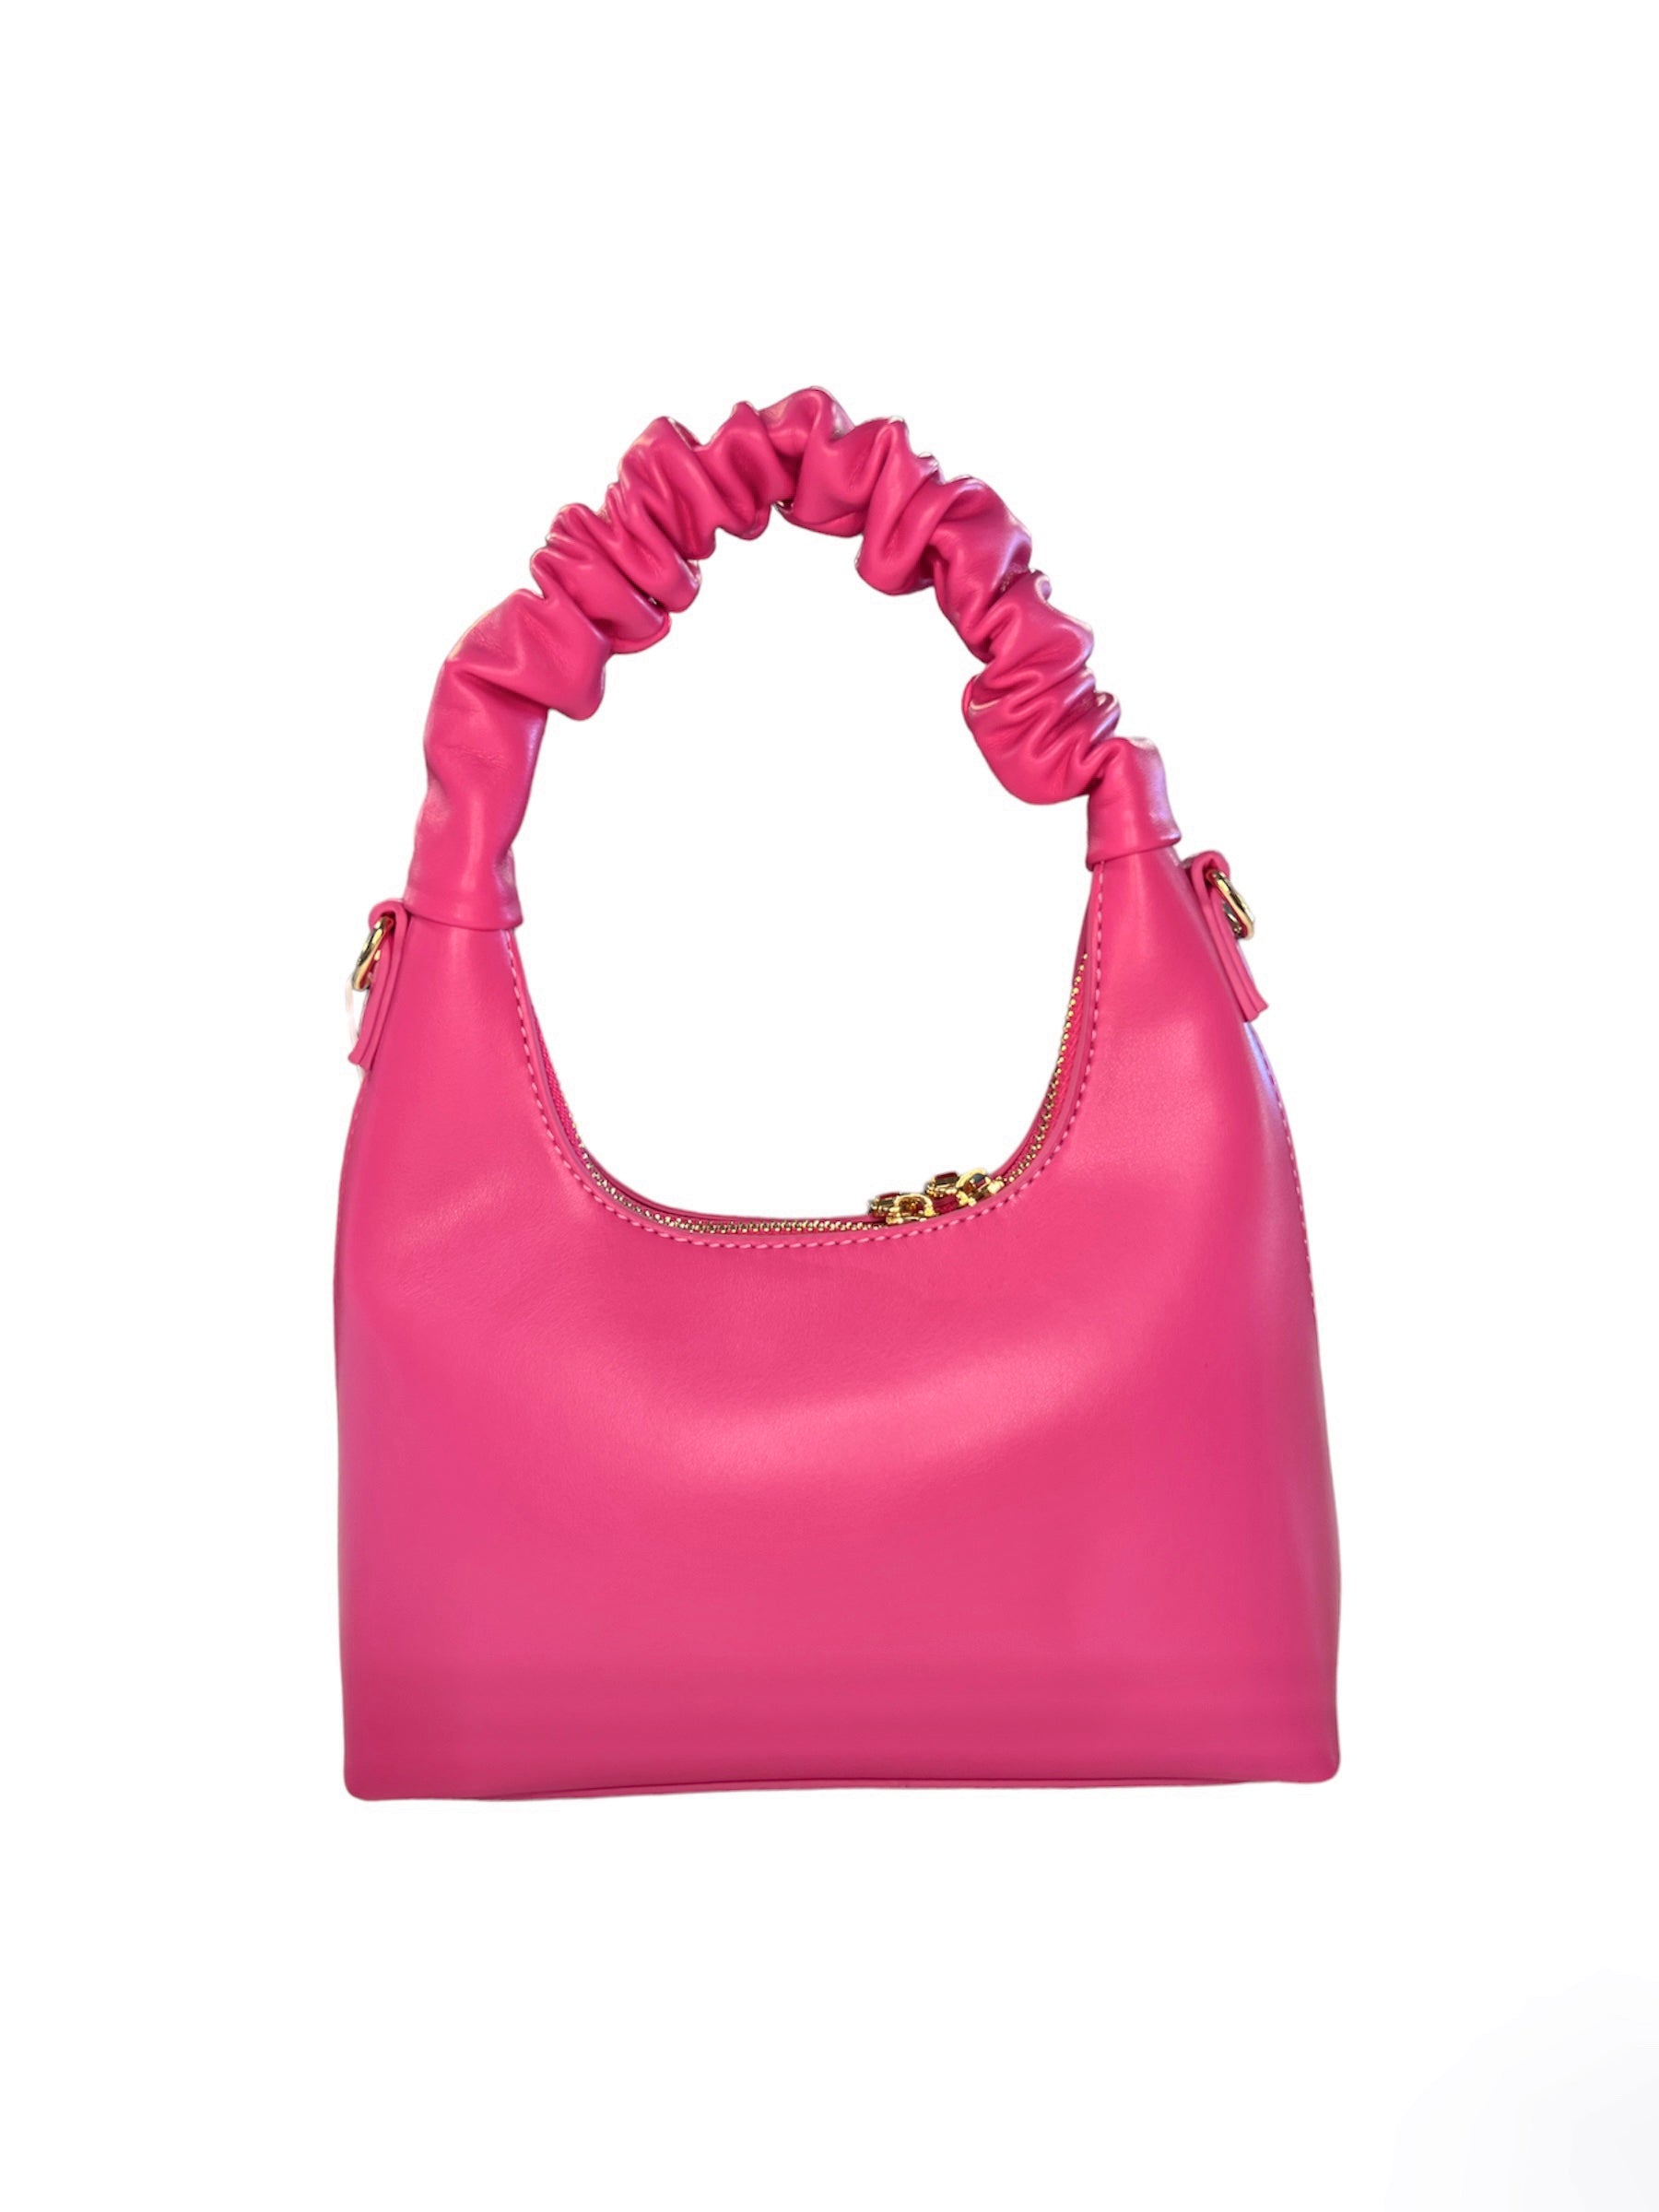 Arie purse *pink